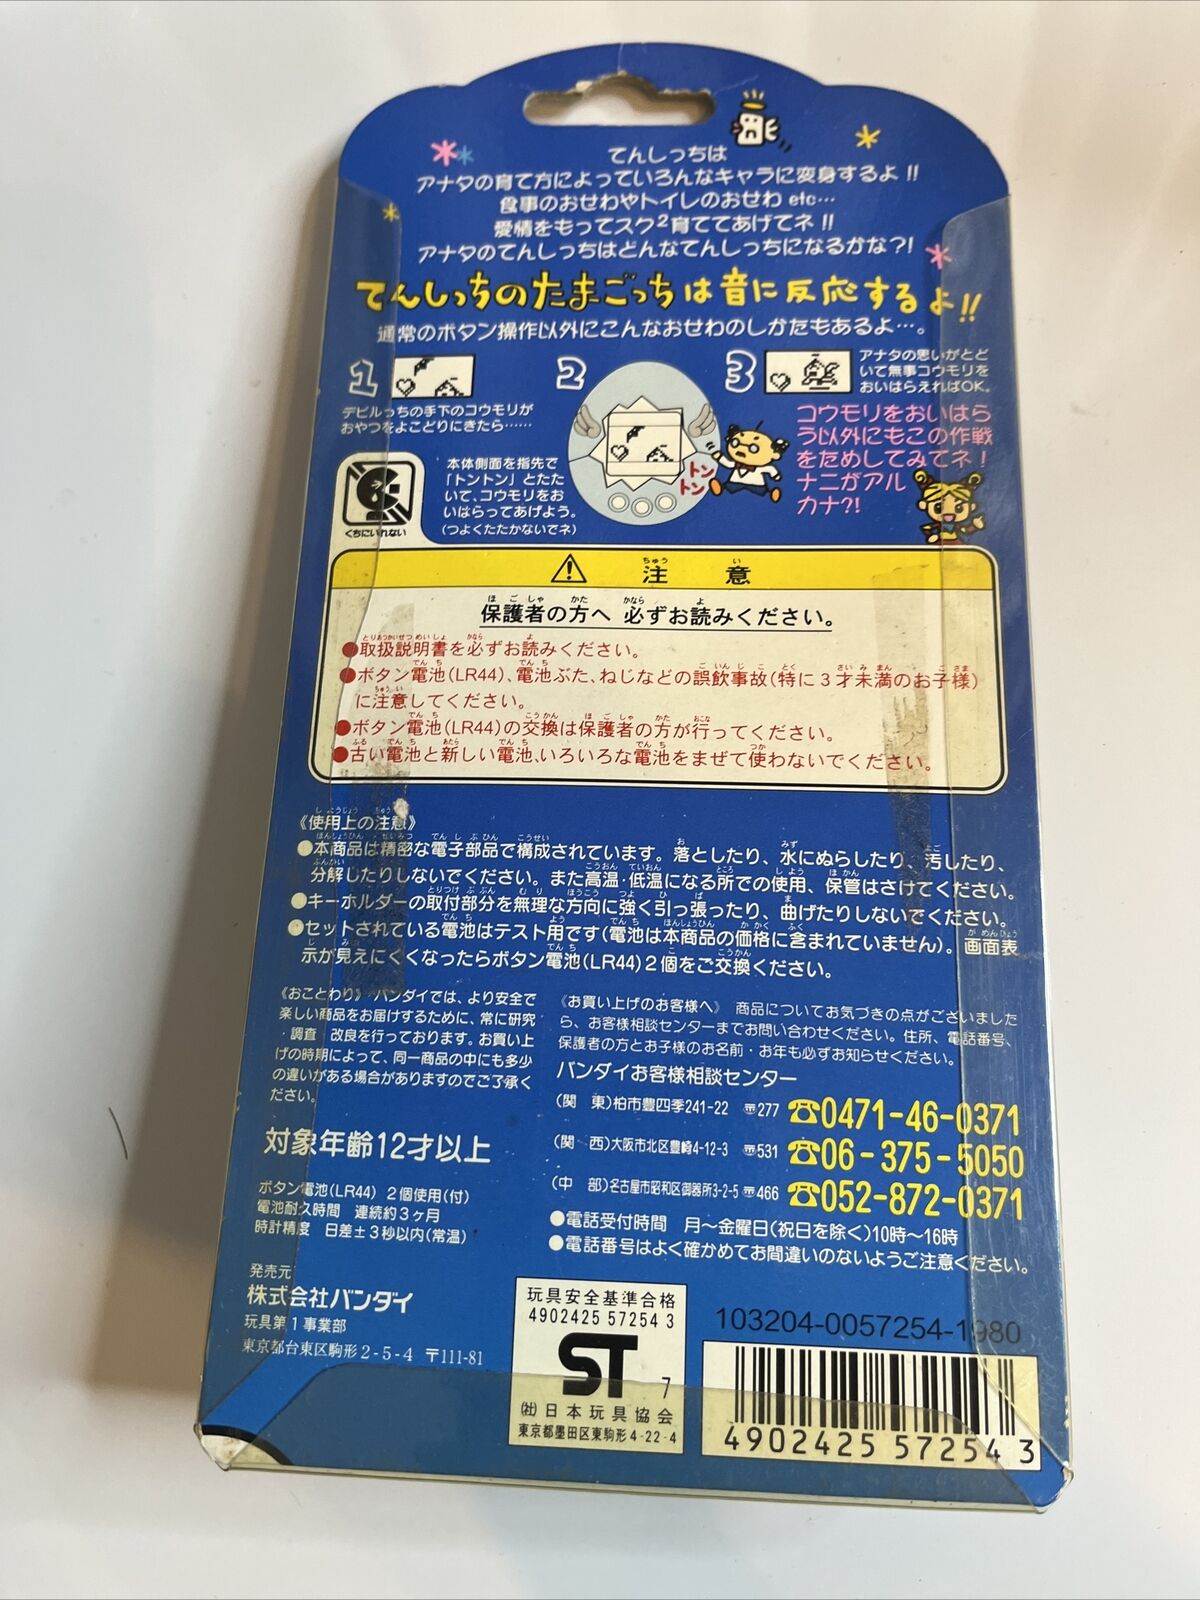 Genuine Bandai Tamagotchi Pearl White 1997 Virtual Pet JAPAN  NEW